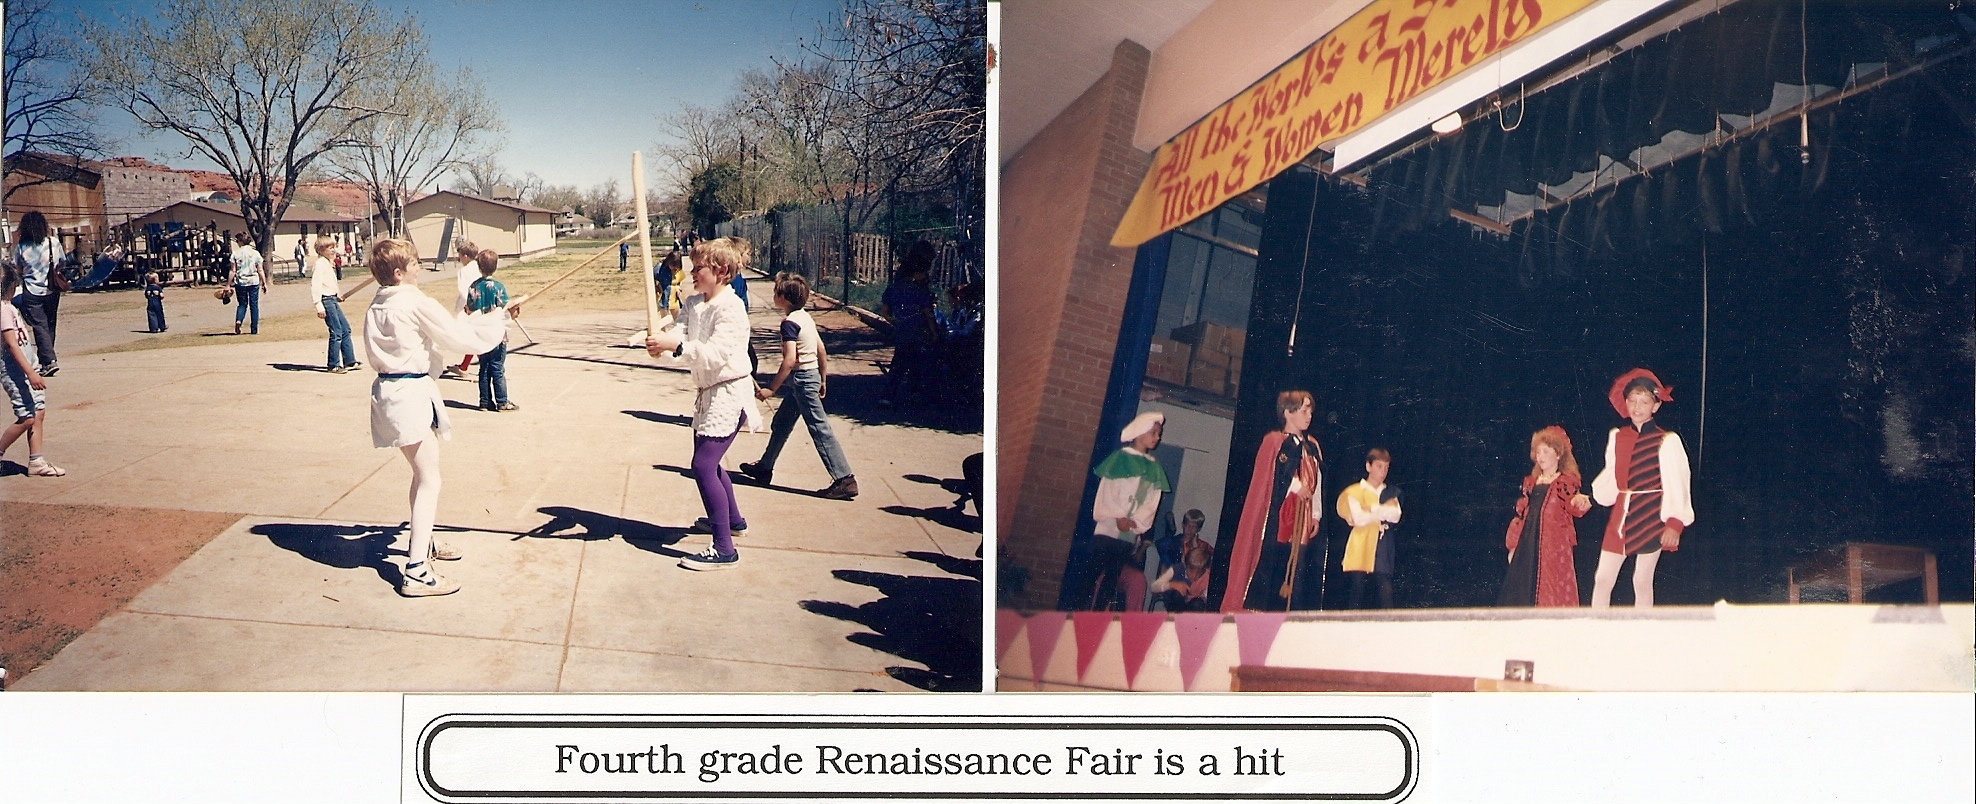 WCHS-00307 4th grade renaissance fair at West Elementary School